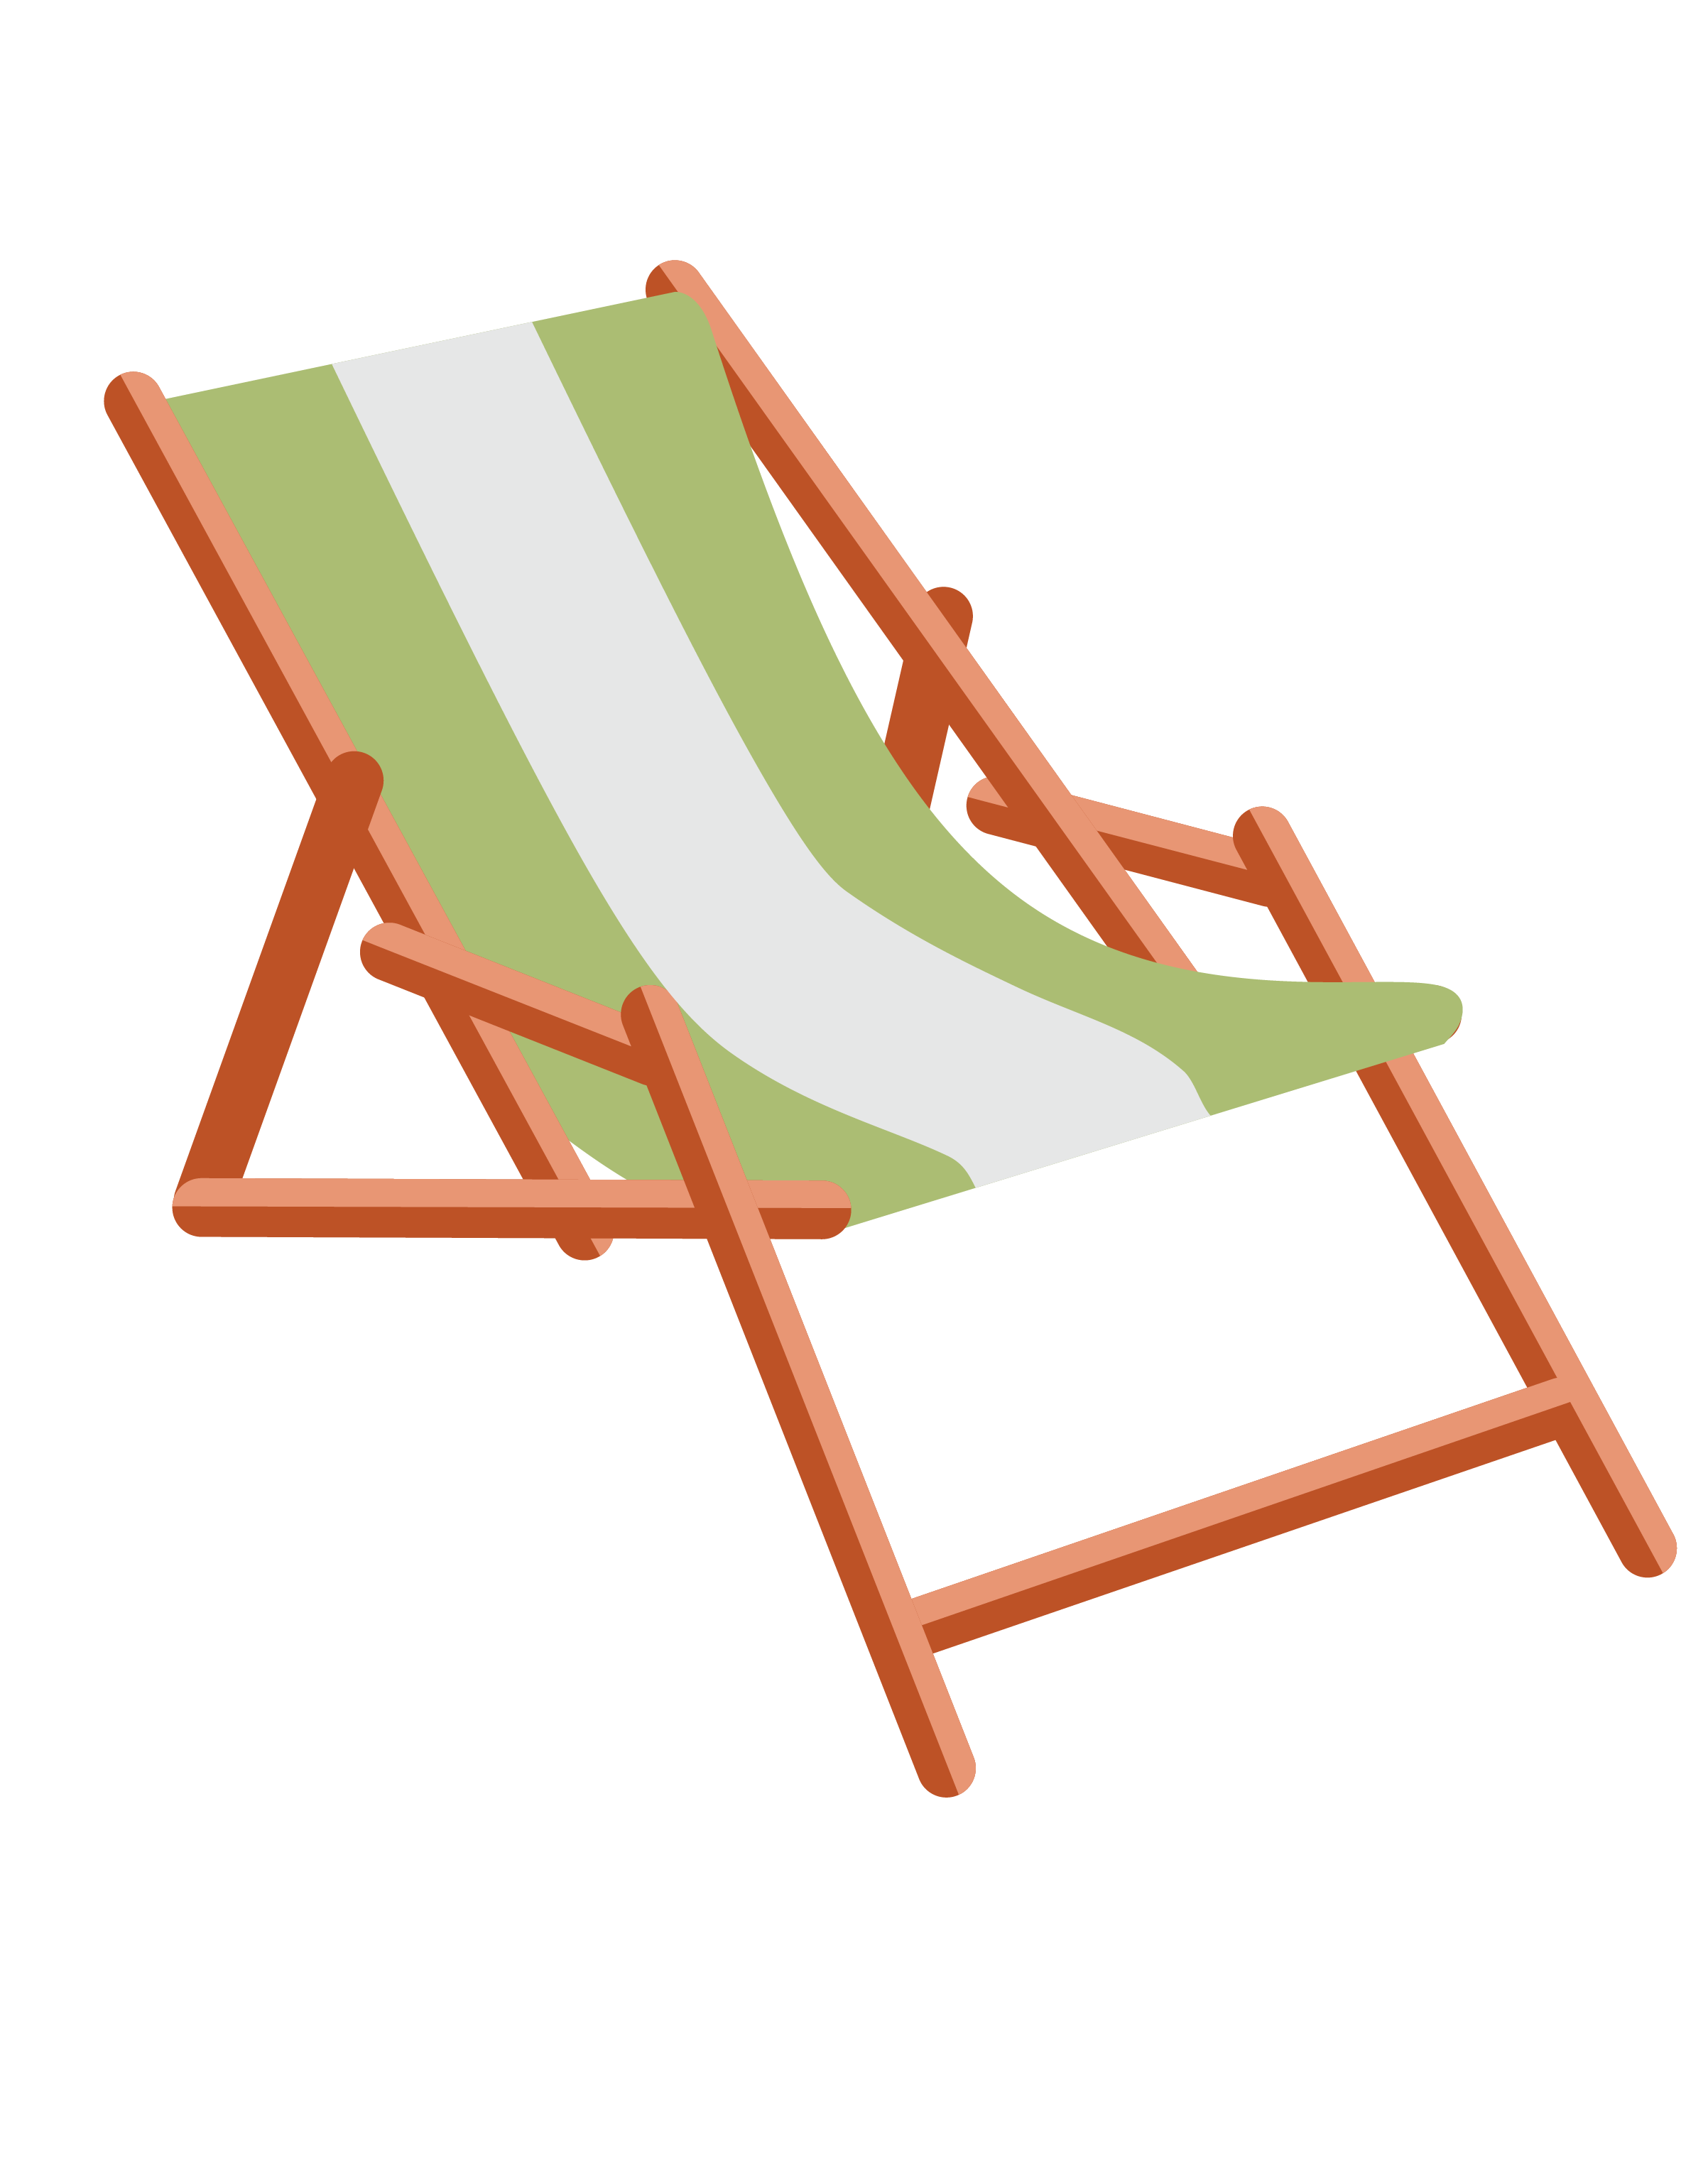 Table Deckchair Folding chair Sling - Vector green beach chair png ...